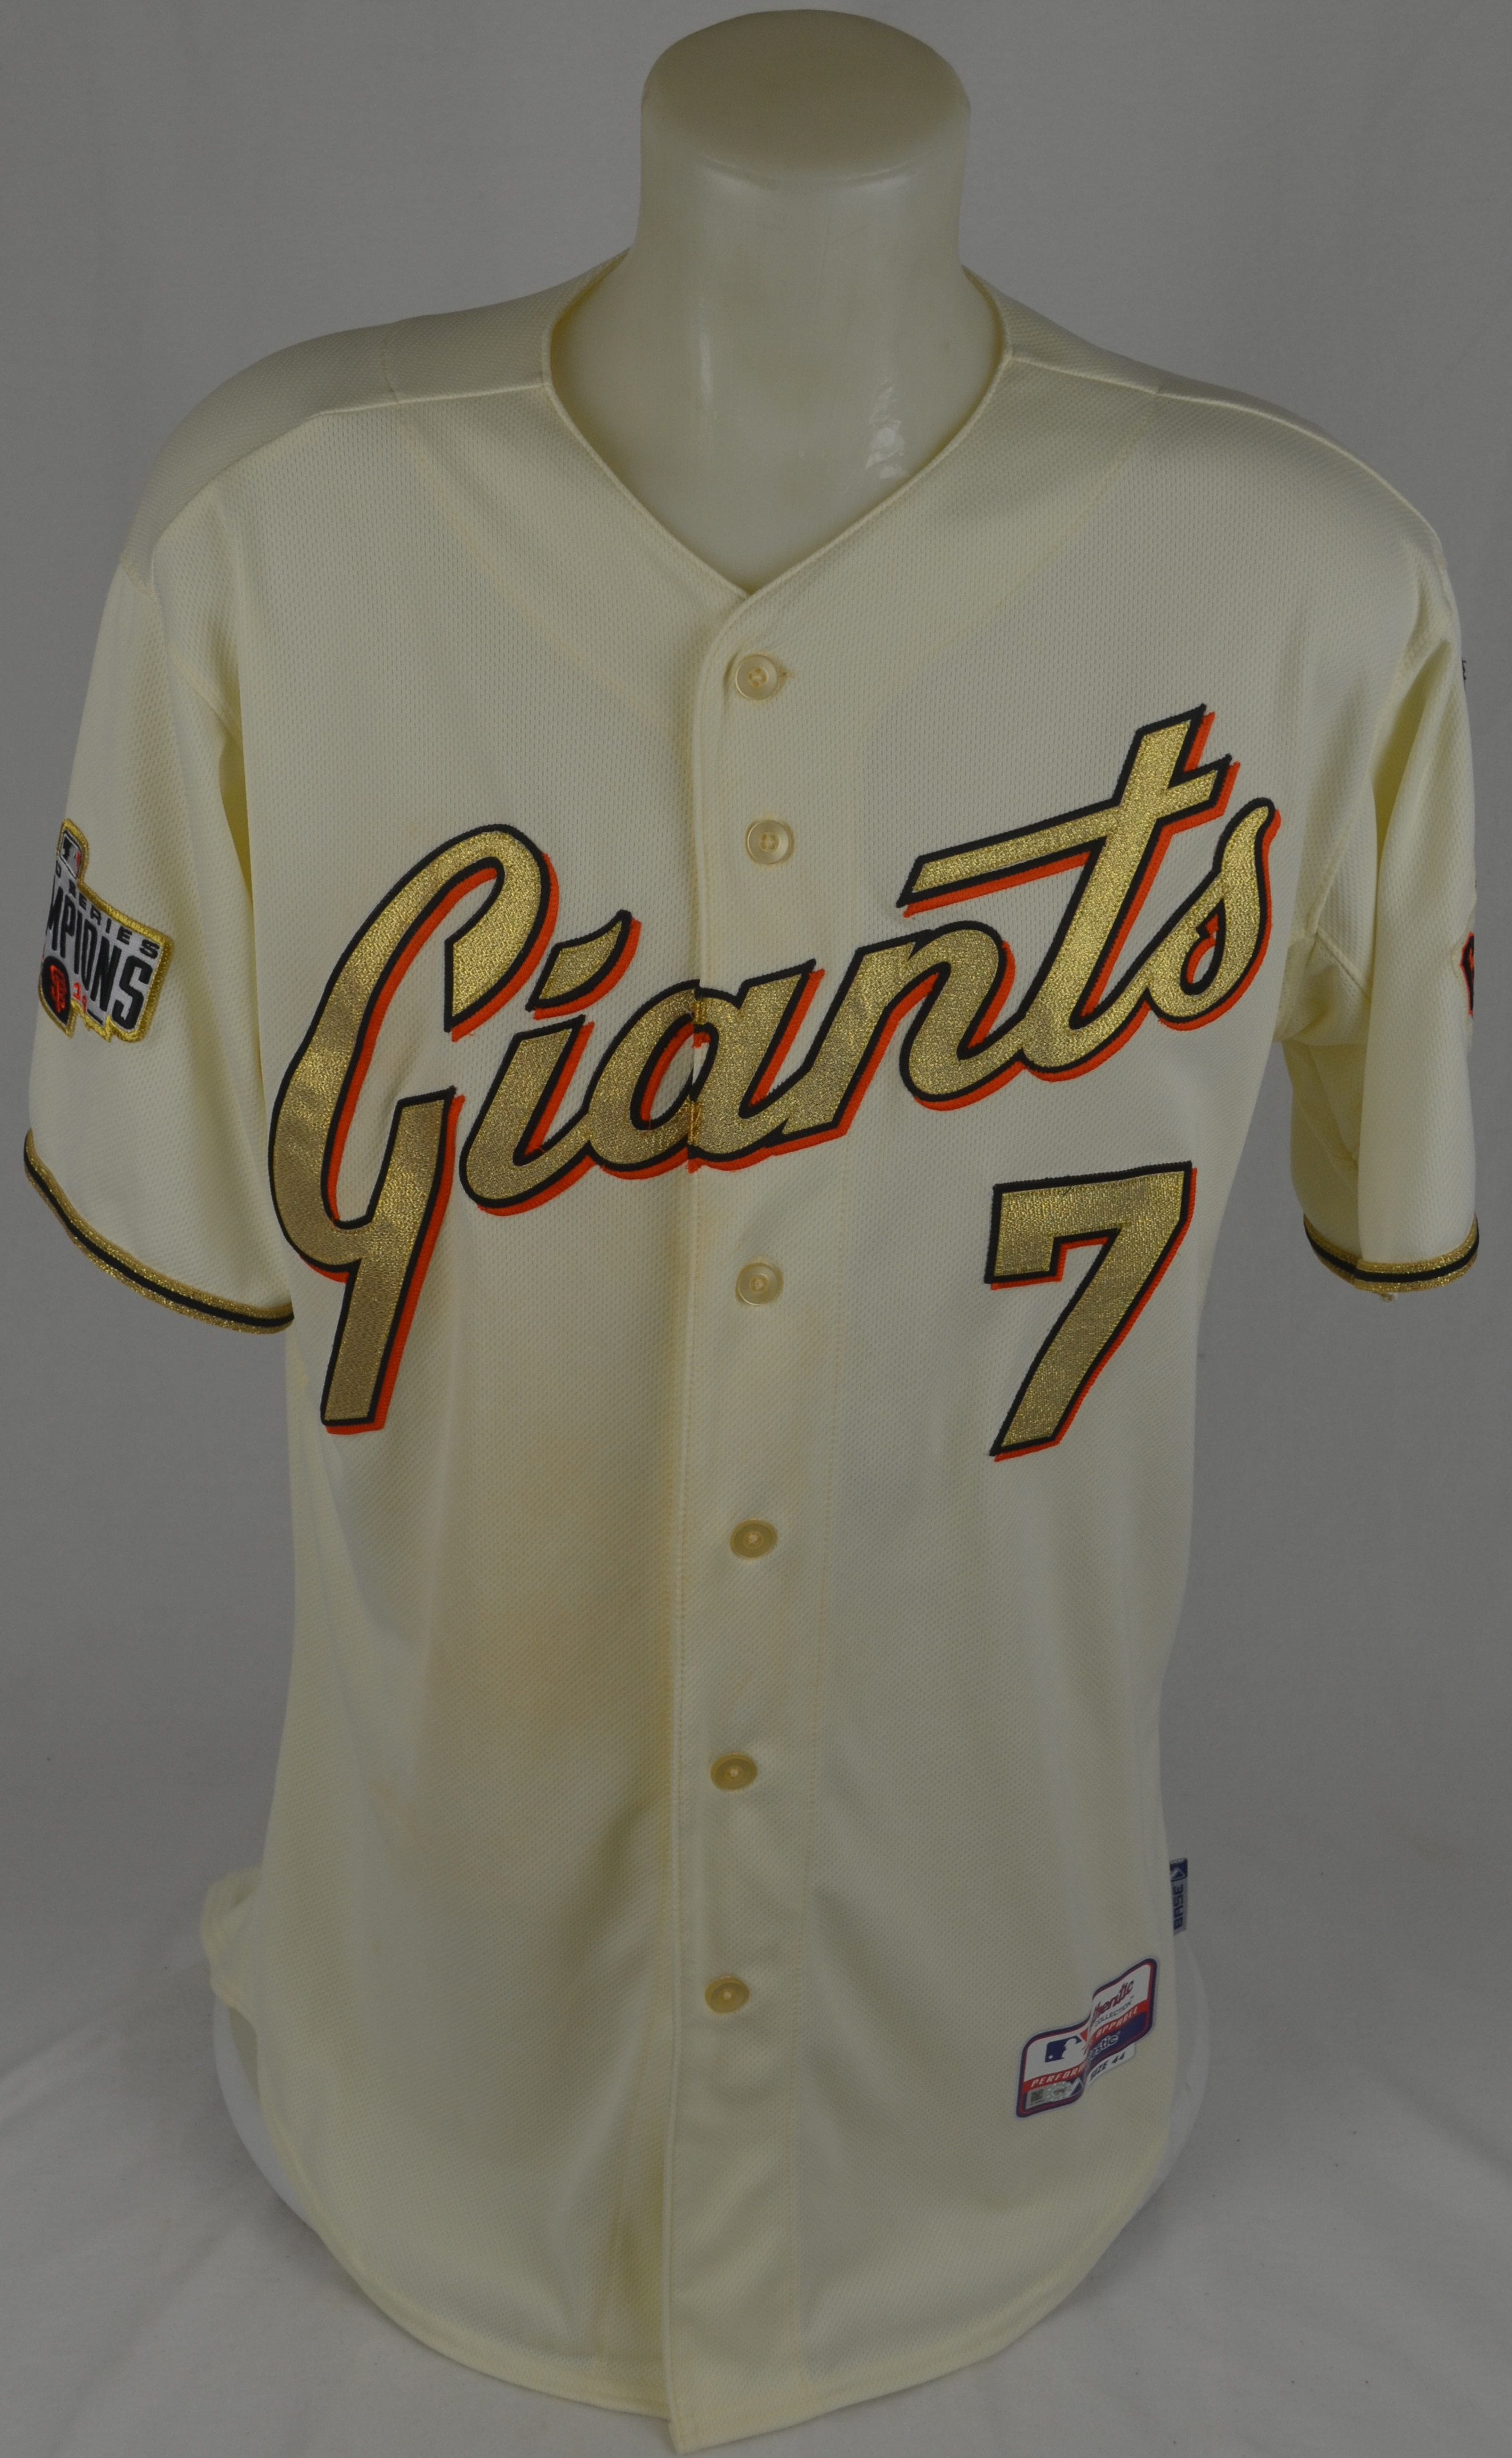 2015 giants jersey